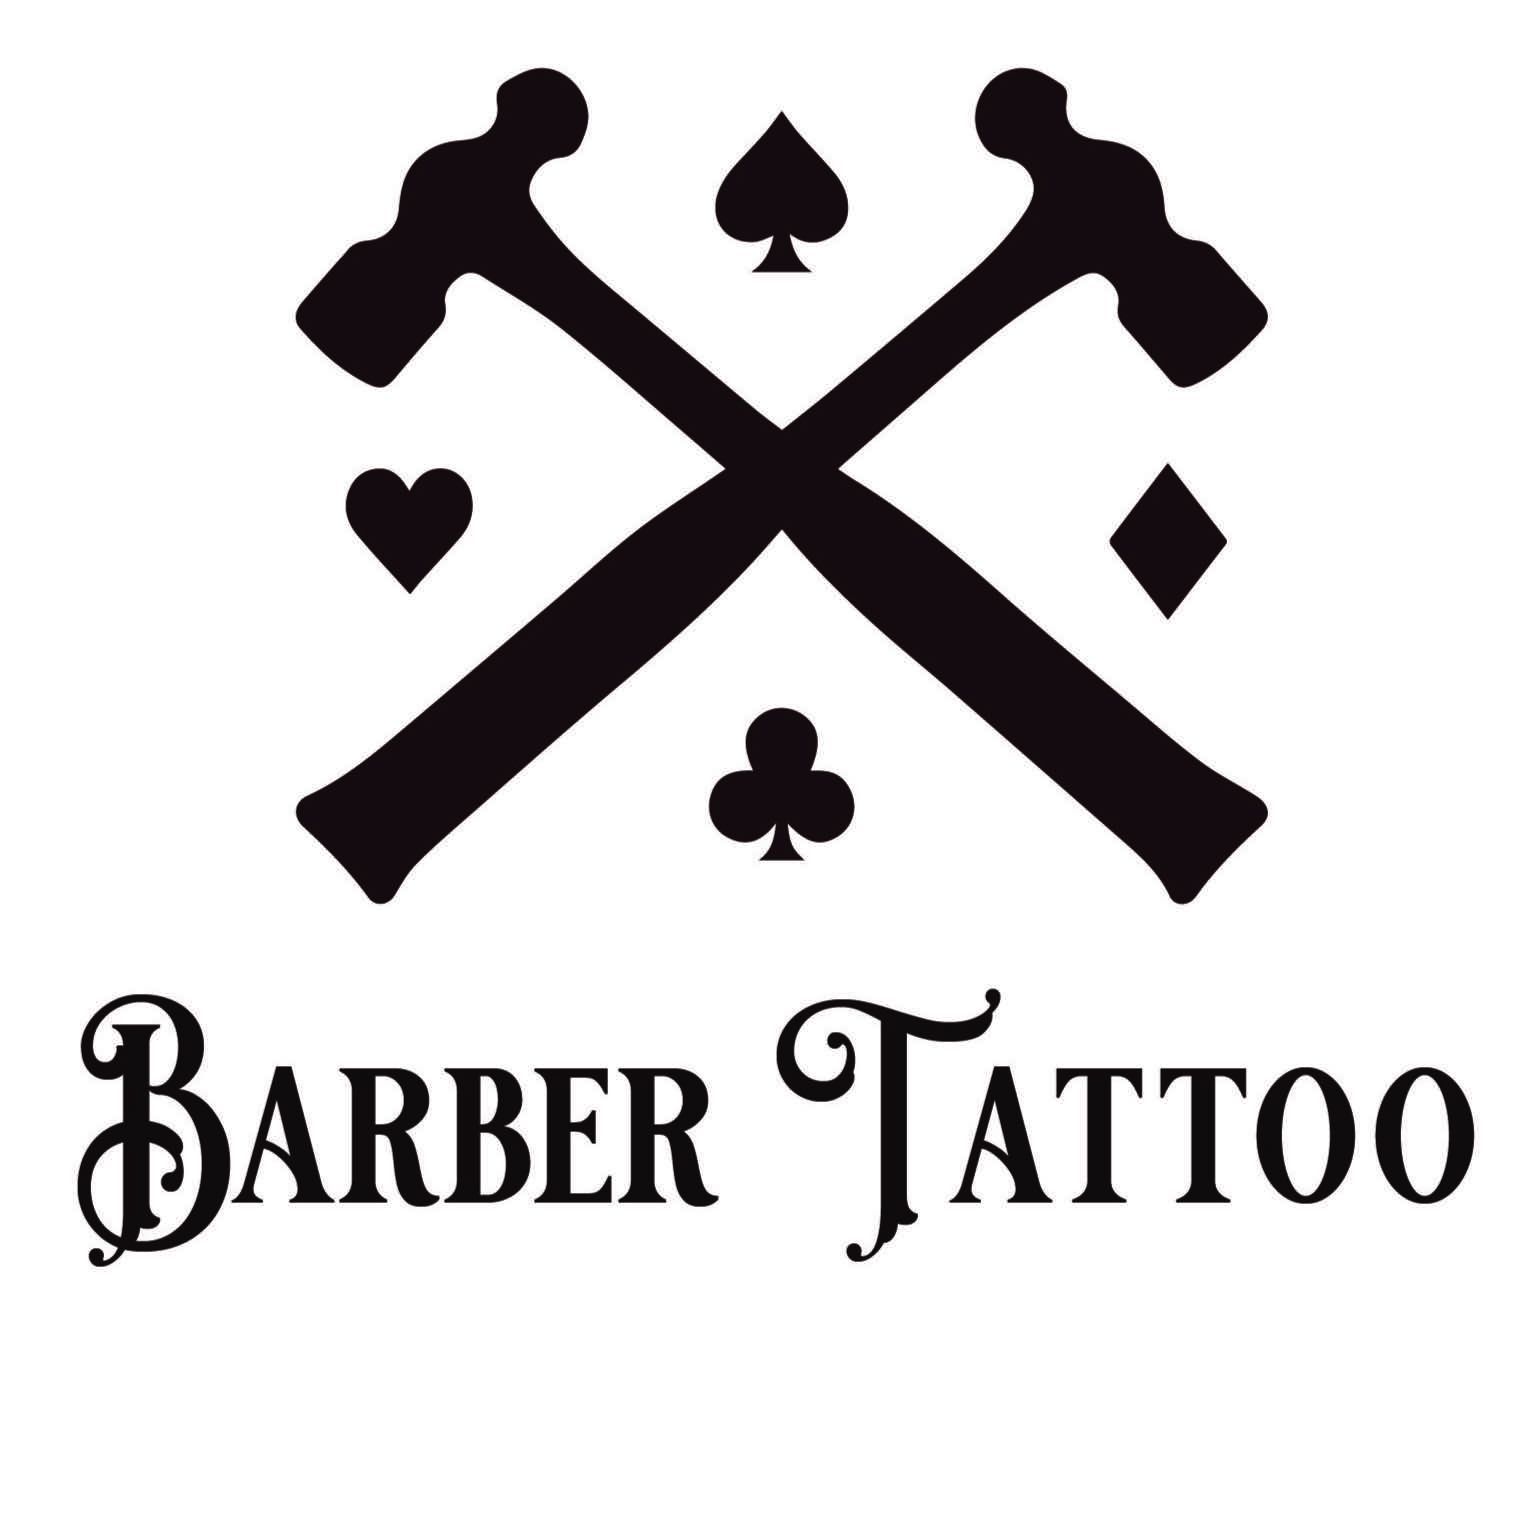 Barber Razor in Tattoo Style Design Element for Poster T Shirt Emblem  Sign Stock Vector  Illustration of knife salon 185312140